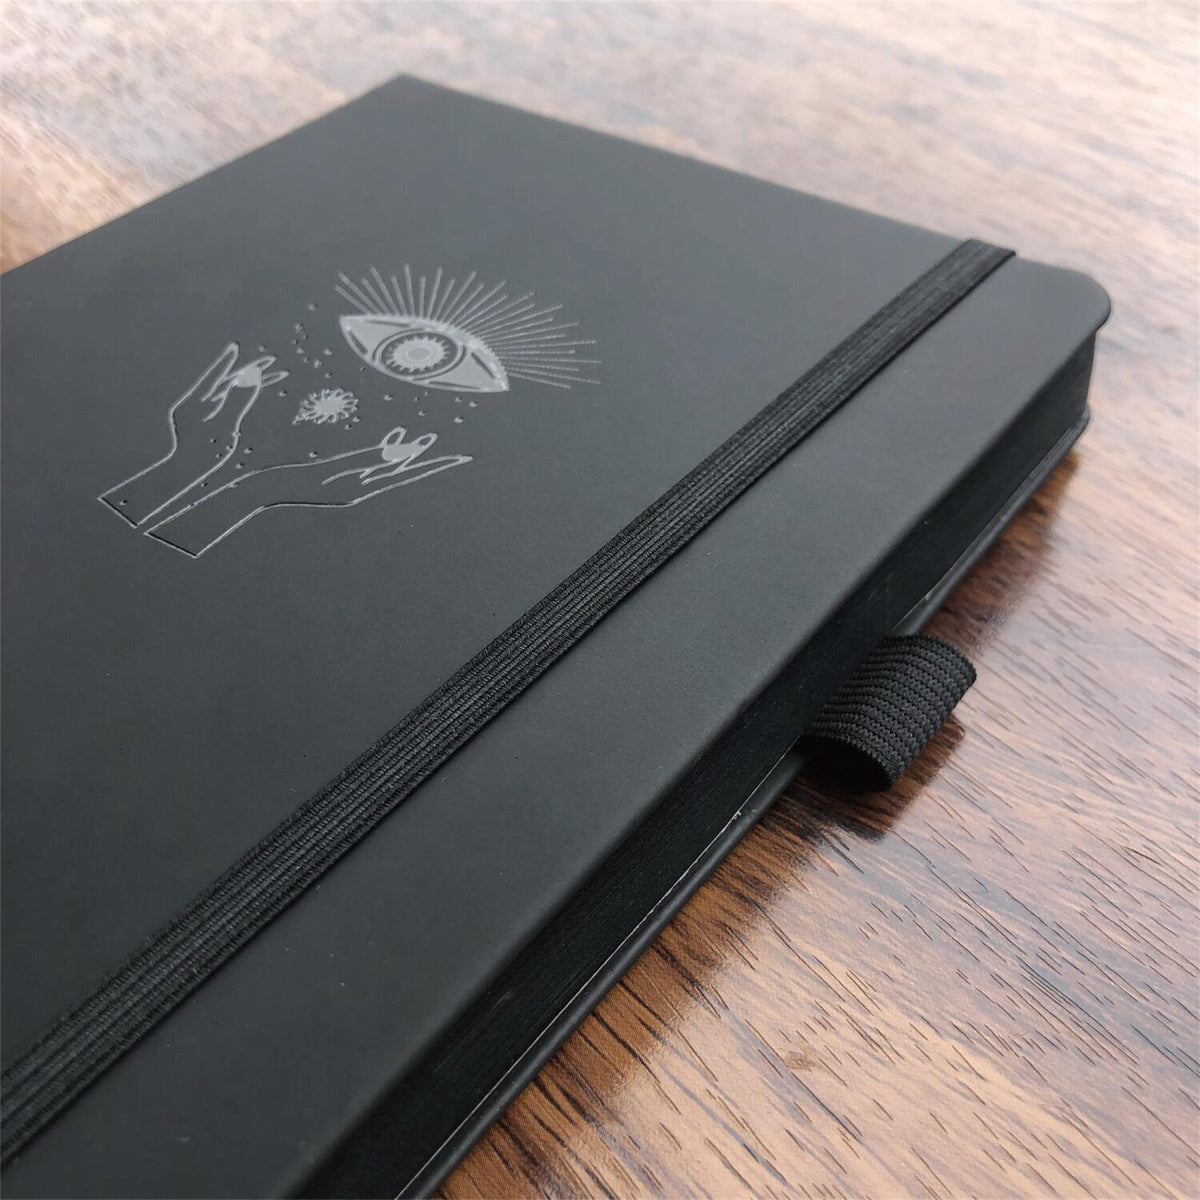 A5 Dot Grid Notebook: Black Hardcover Vegan Leather